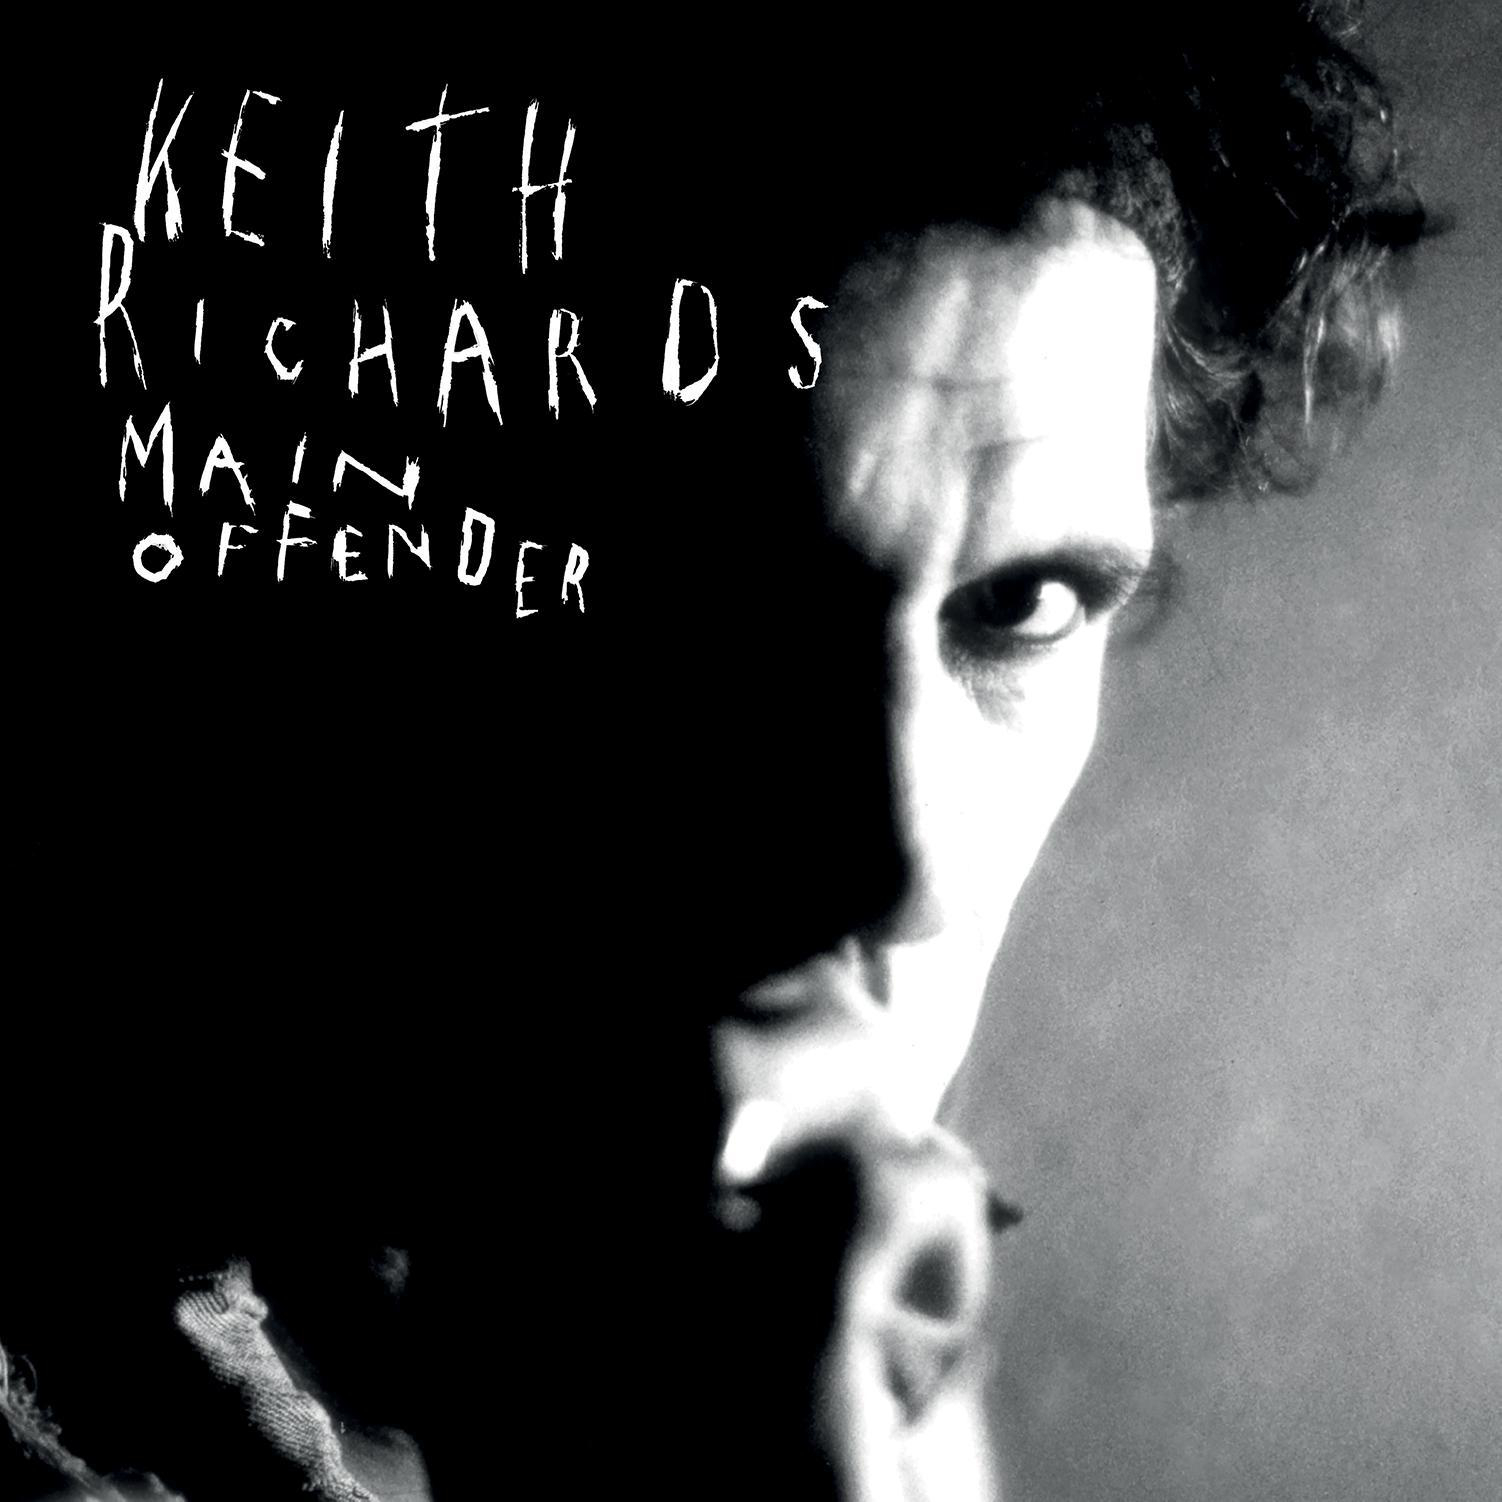 Keith Richards (Remastered) - (Vinyl) - Main Offender